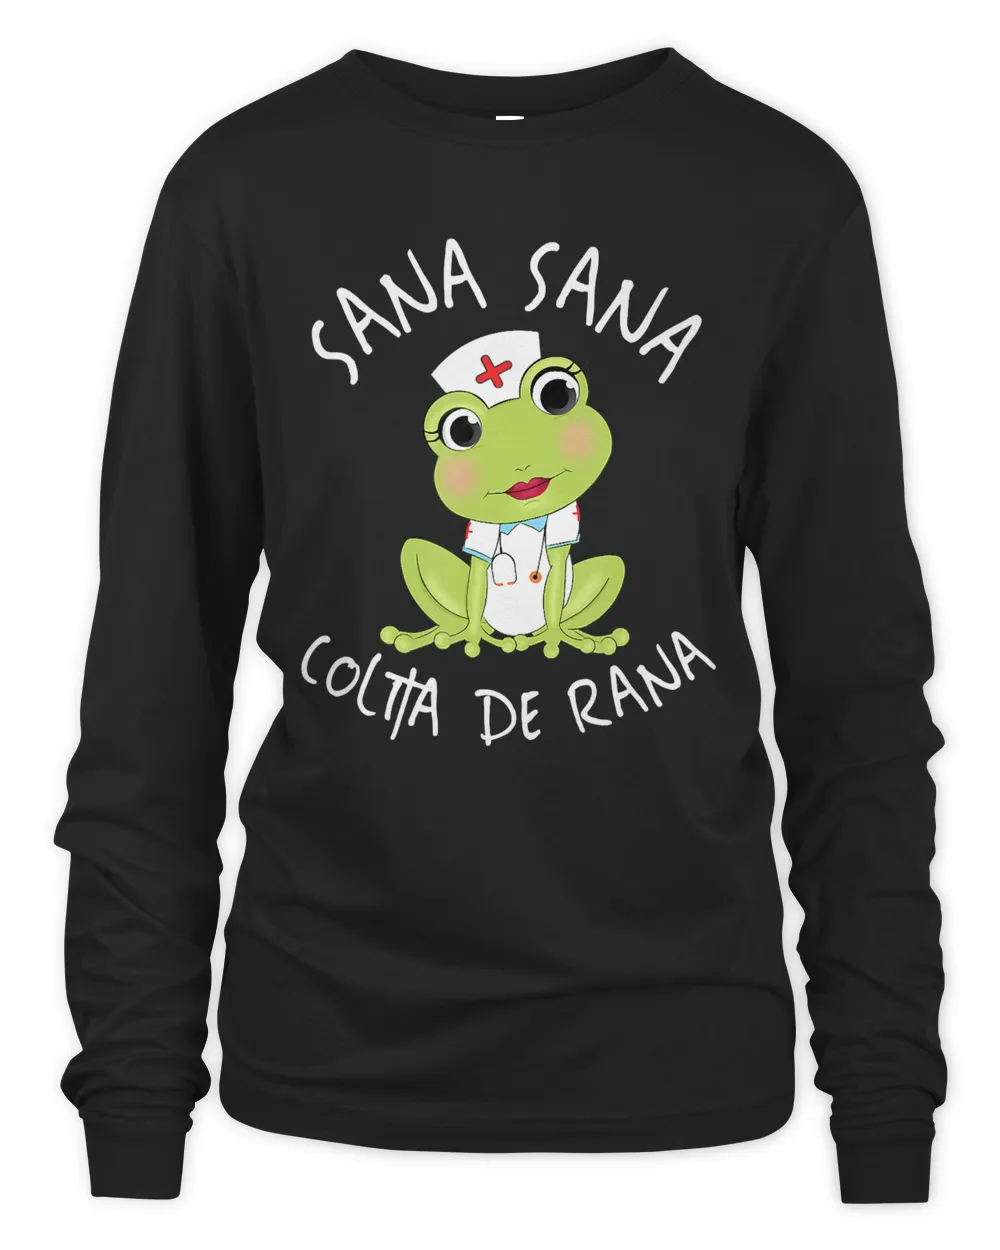 Sana Sana Colita De Rana Cute Mexican Nurse Spanish Playera T-Shirt